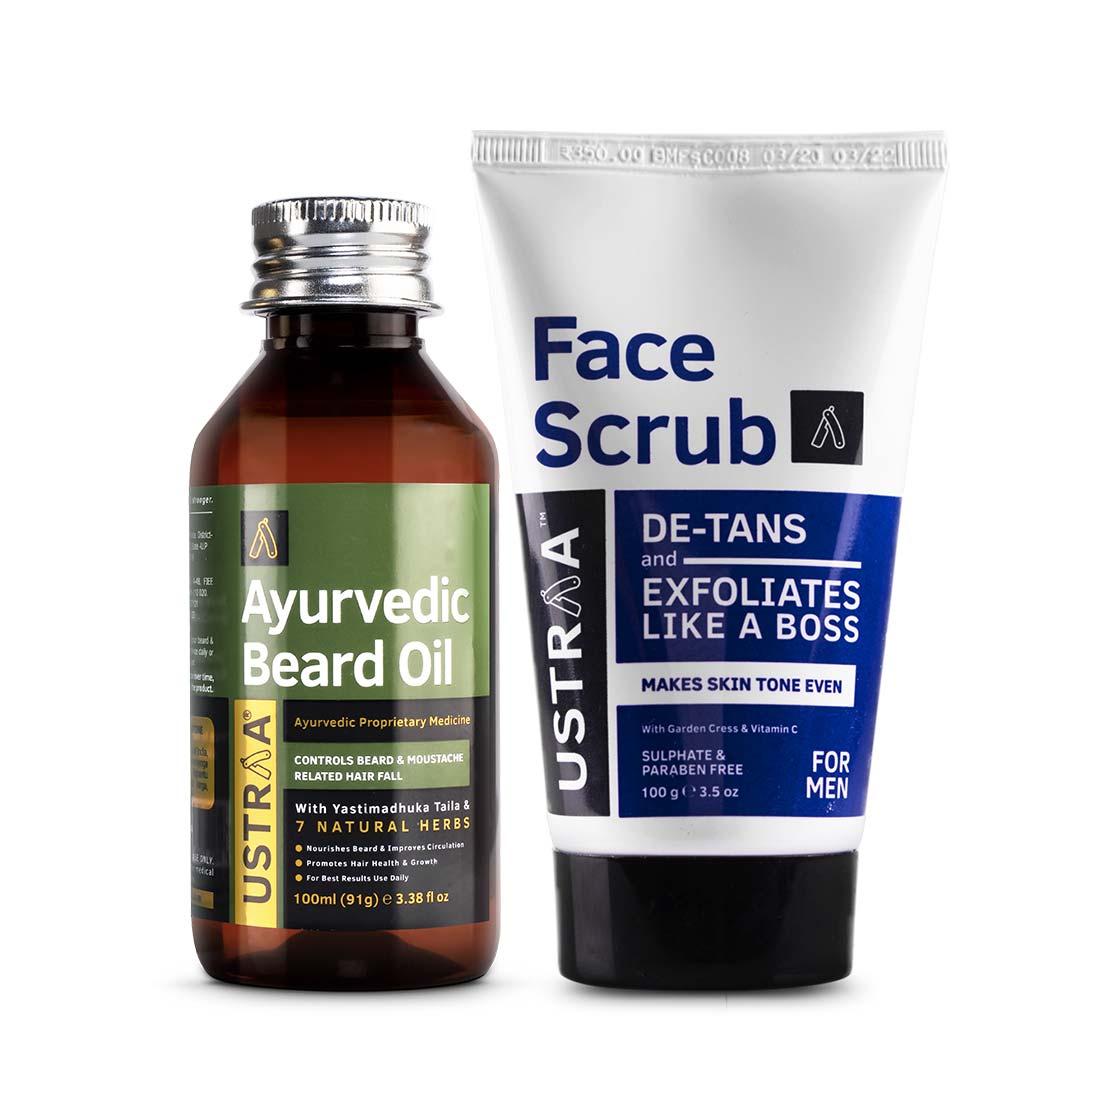 Ayurvedic Beard Oil & De-Tan Face Scrub 